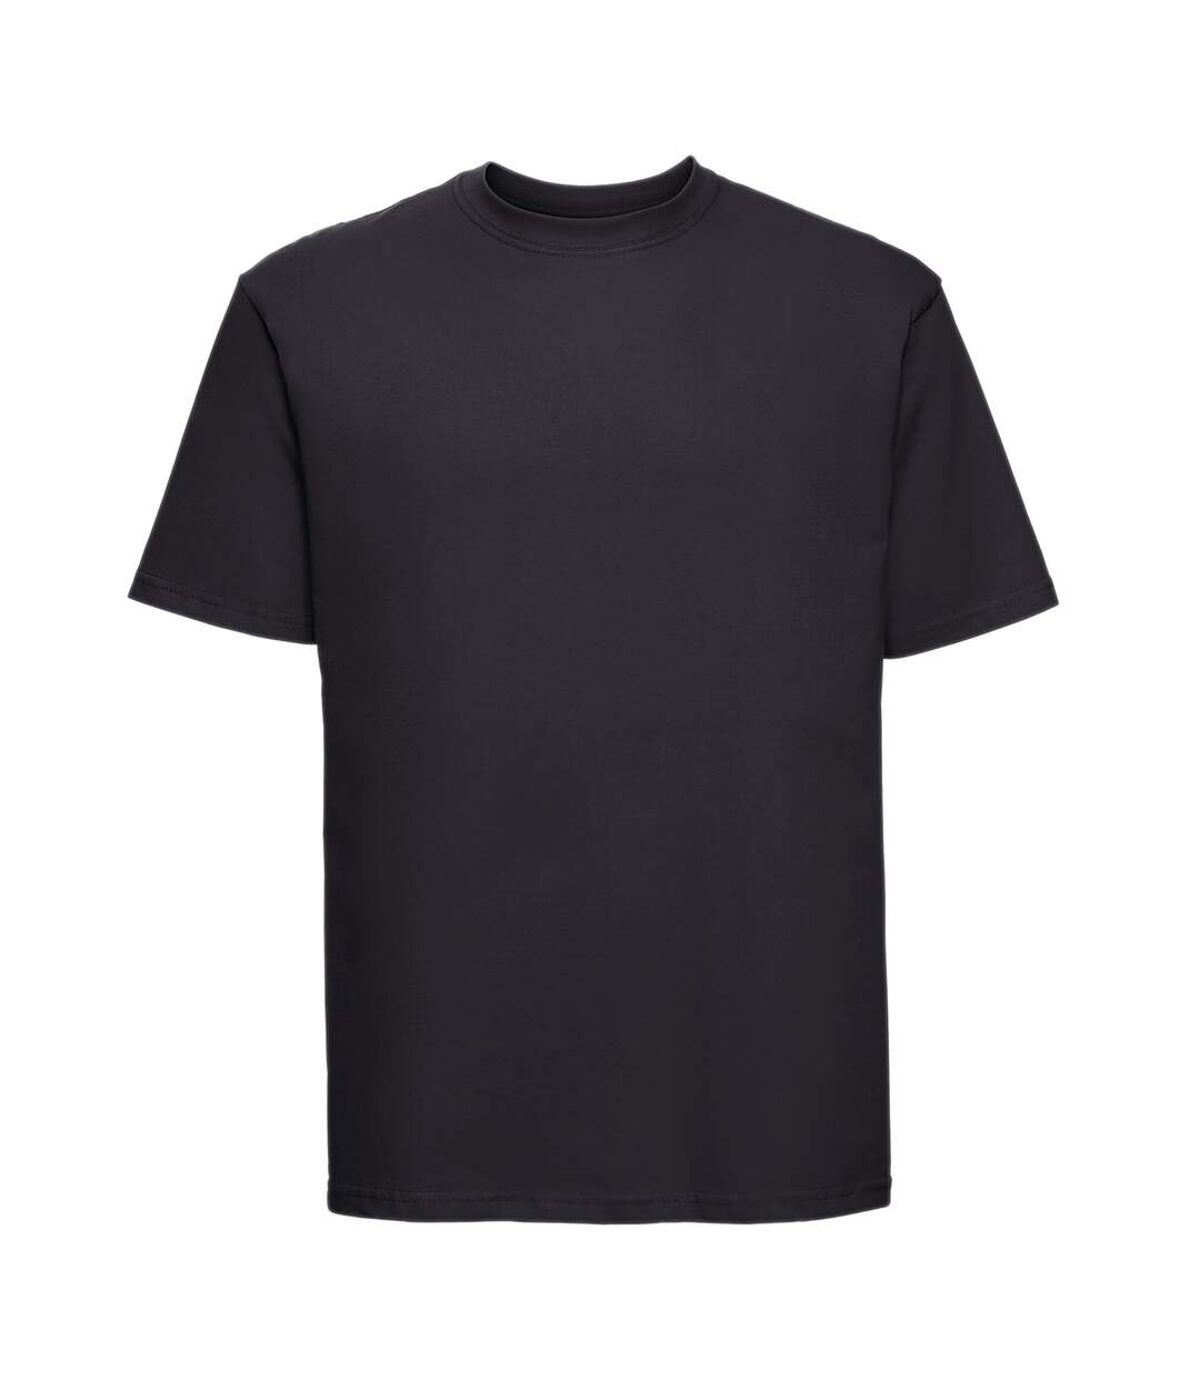 Casual - T-shirt manches courtes - Homme (Noir) - UTAB260